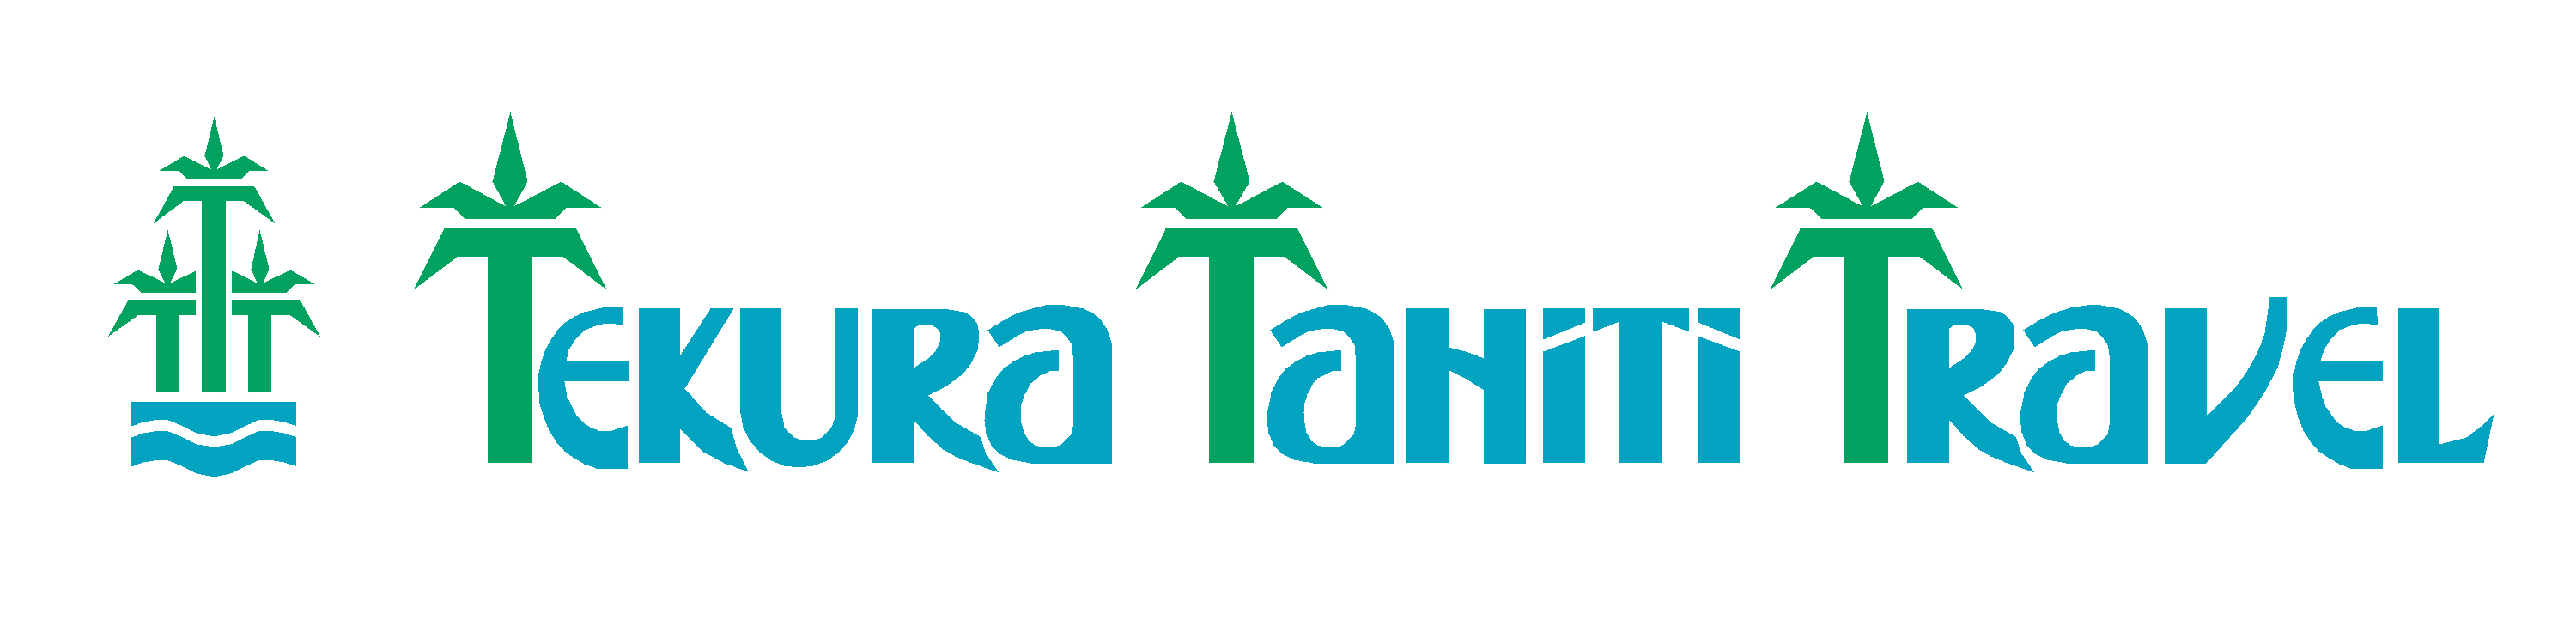 Tekura-Tahiti-Travel--logo.jpg